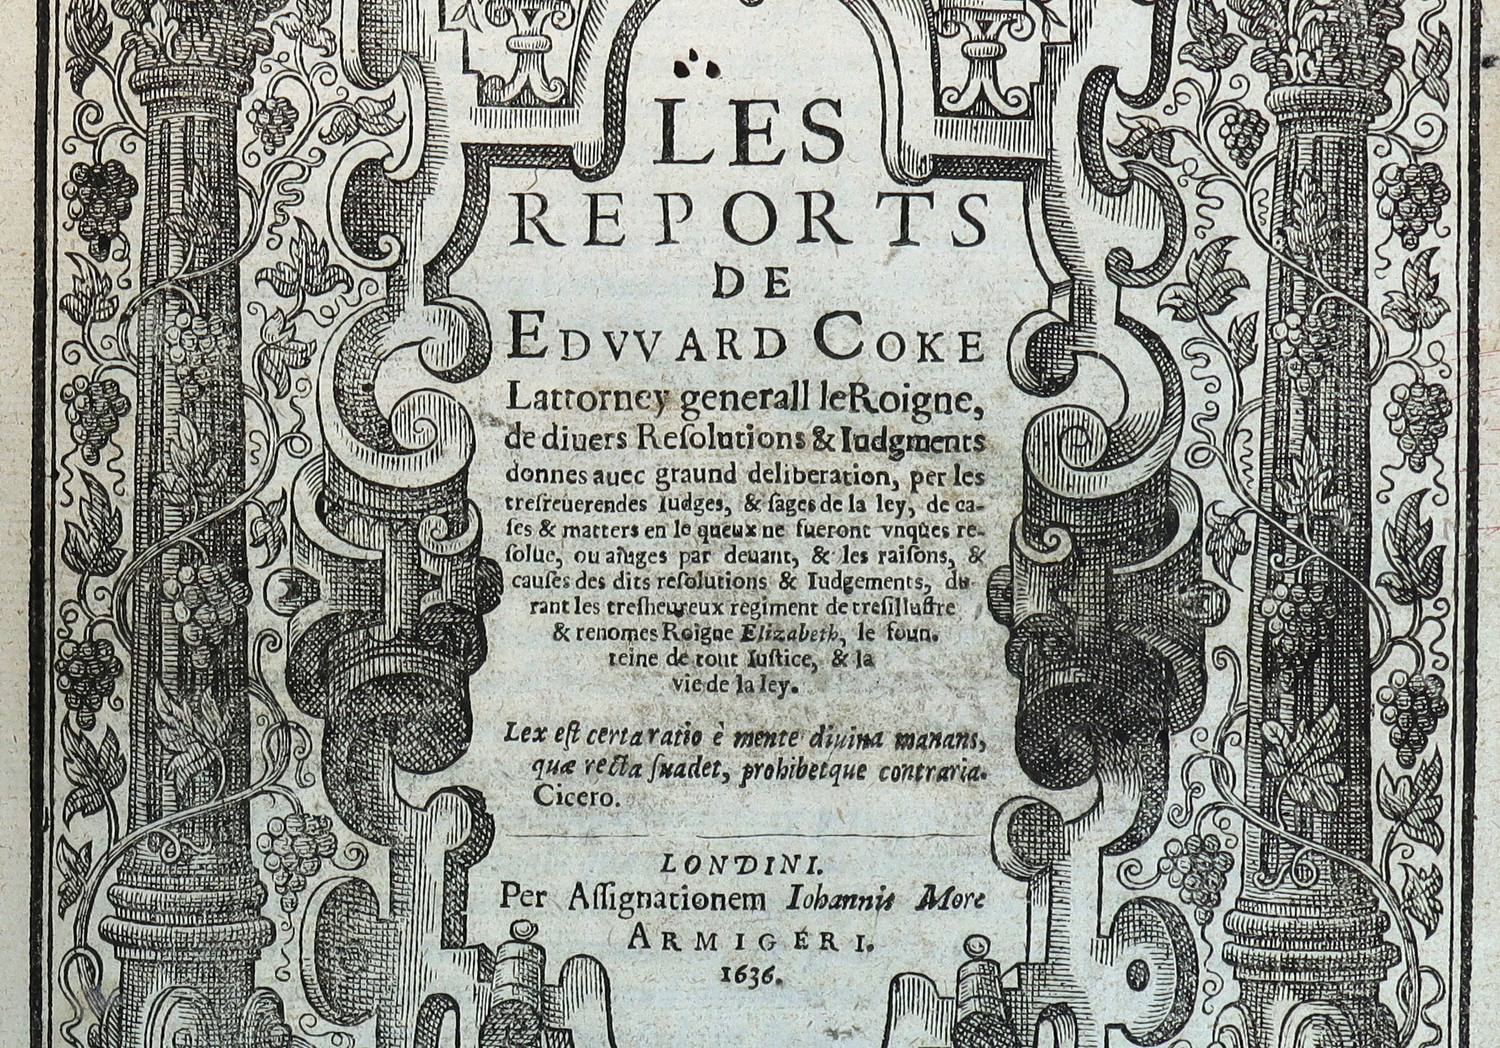 Selected Writings of Sir Edward Coke, vol. I